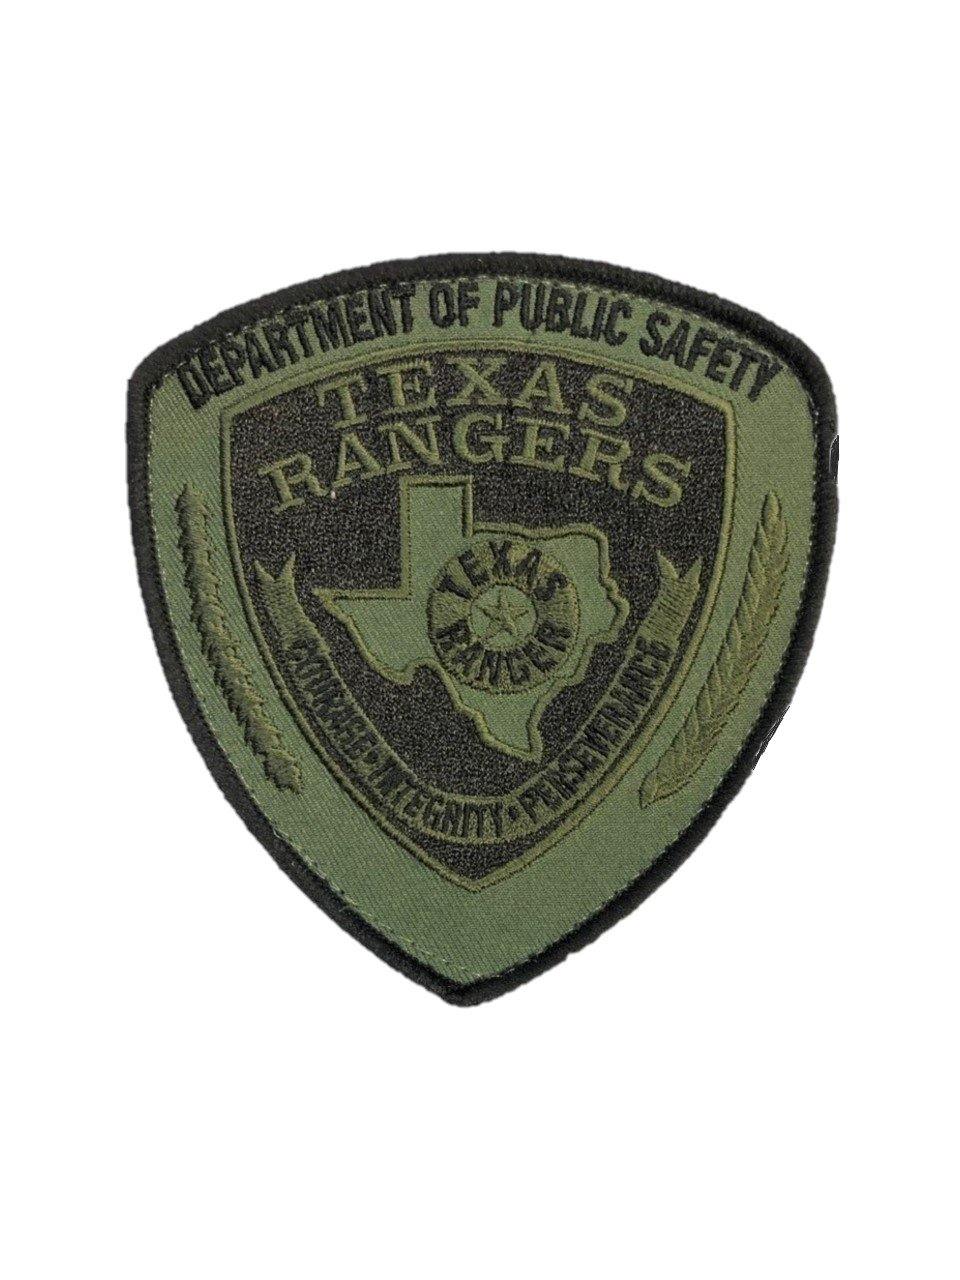 Texas Ranger Patch